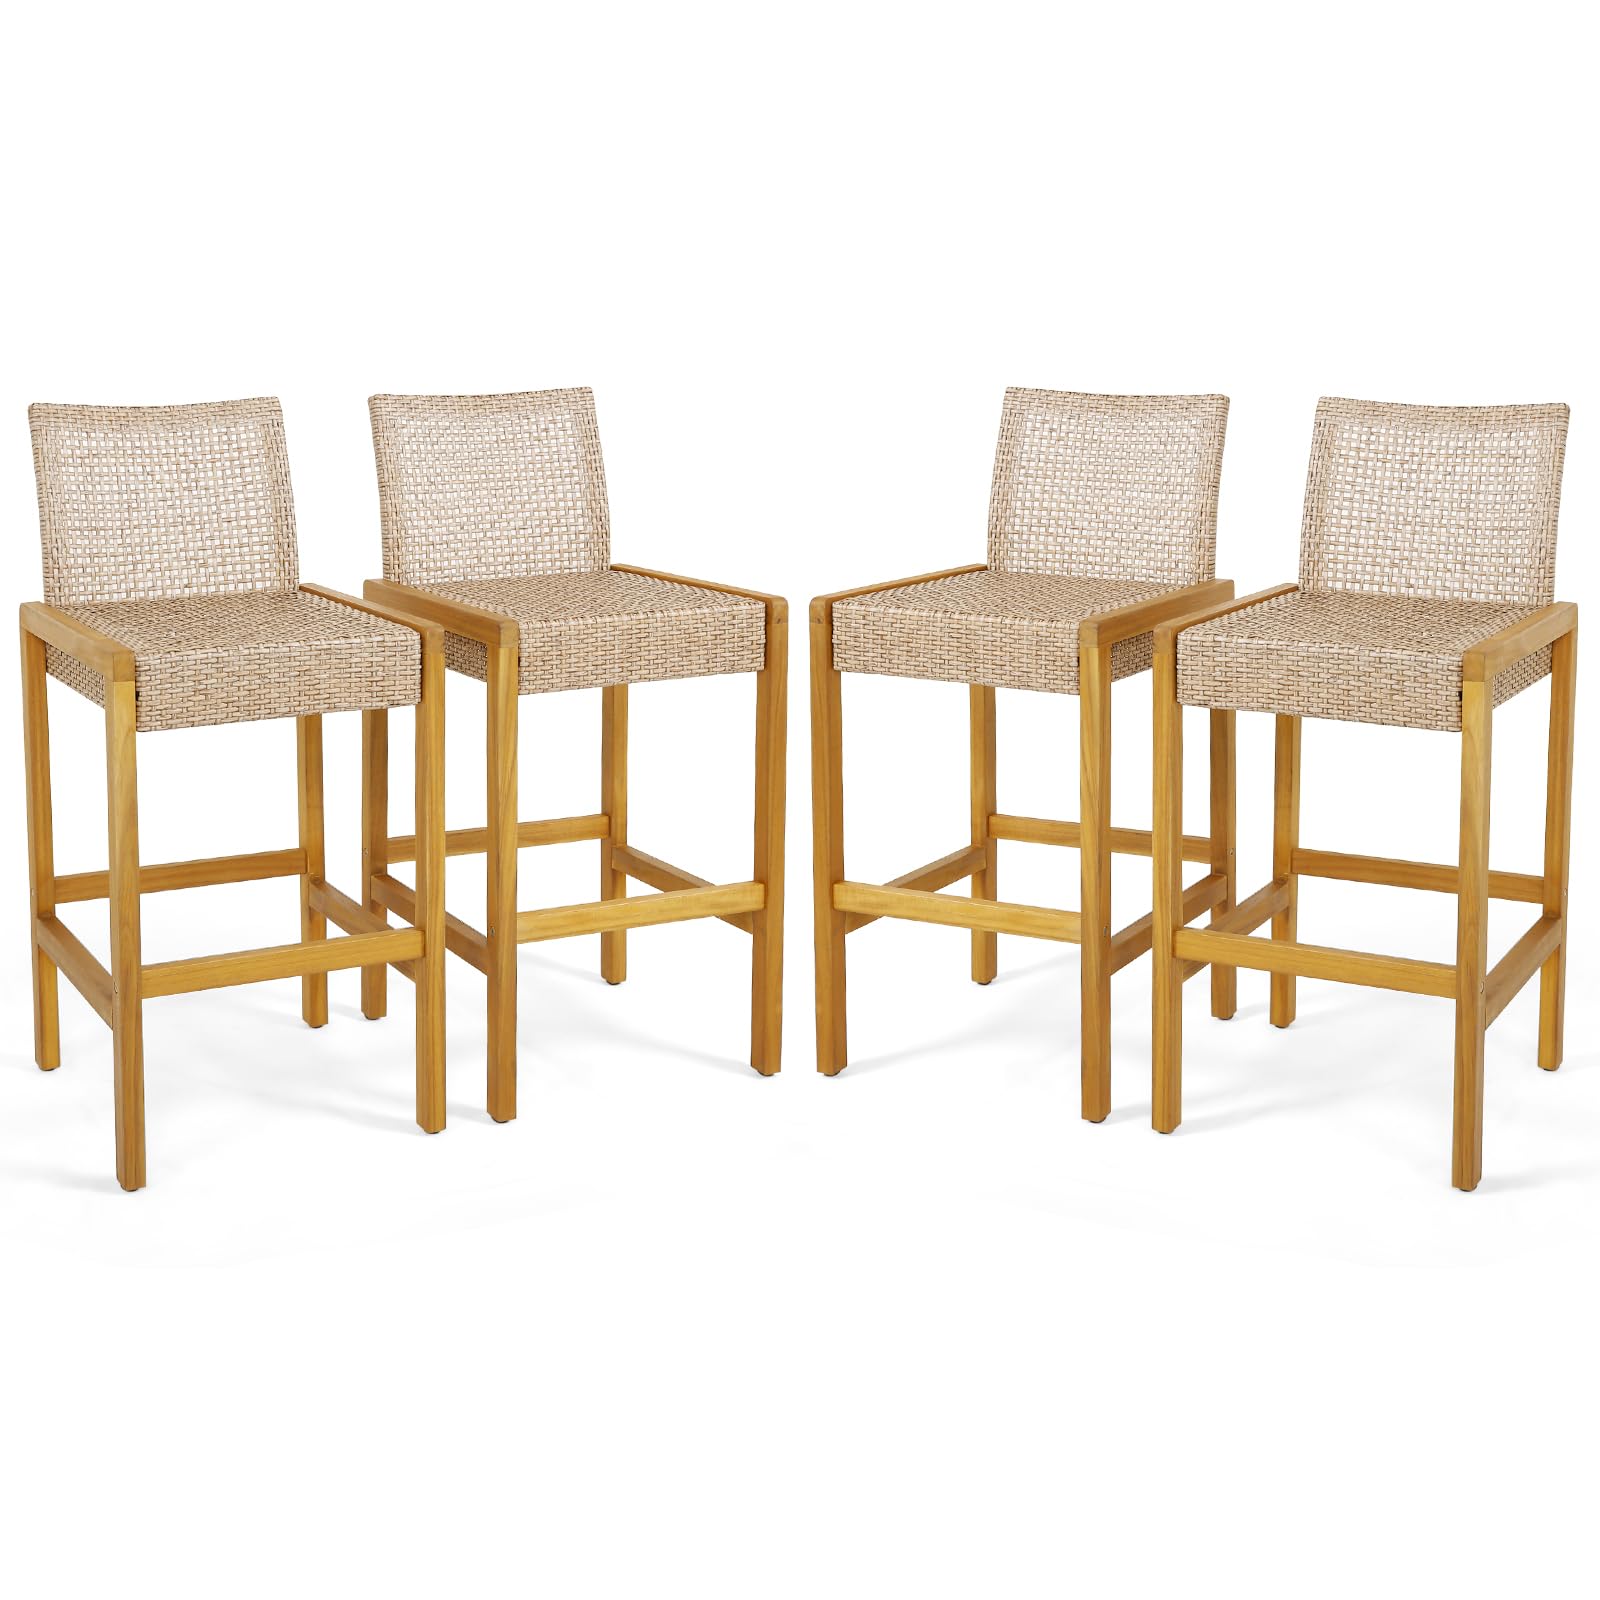 Patio Wood Barstools Set of 4 - Tangkula